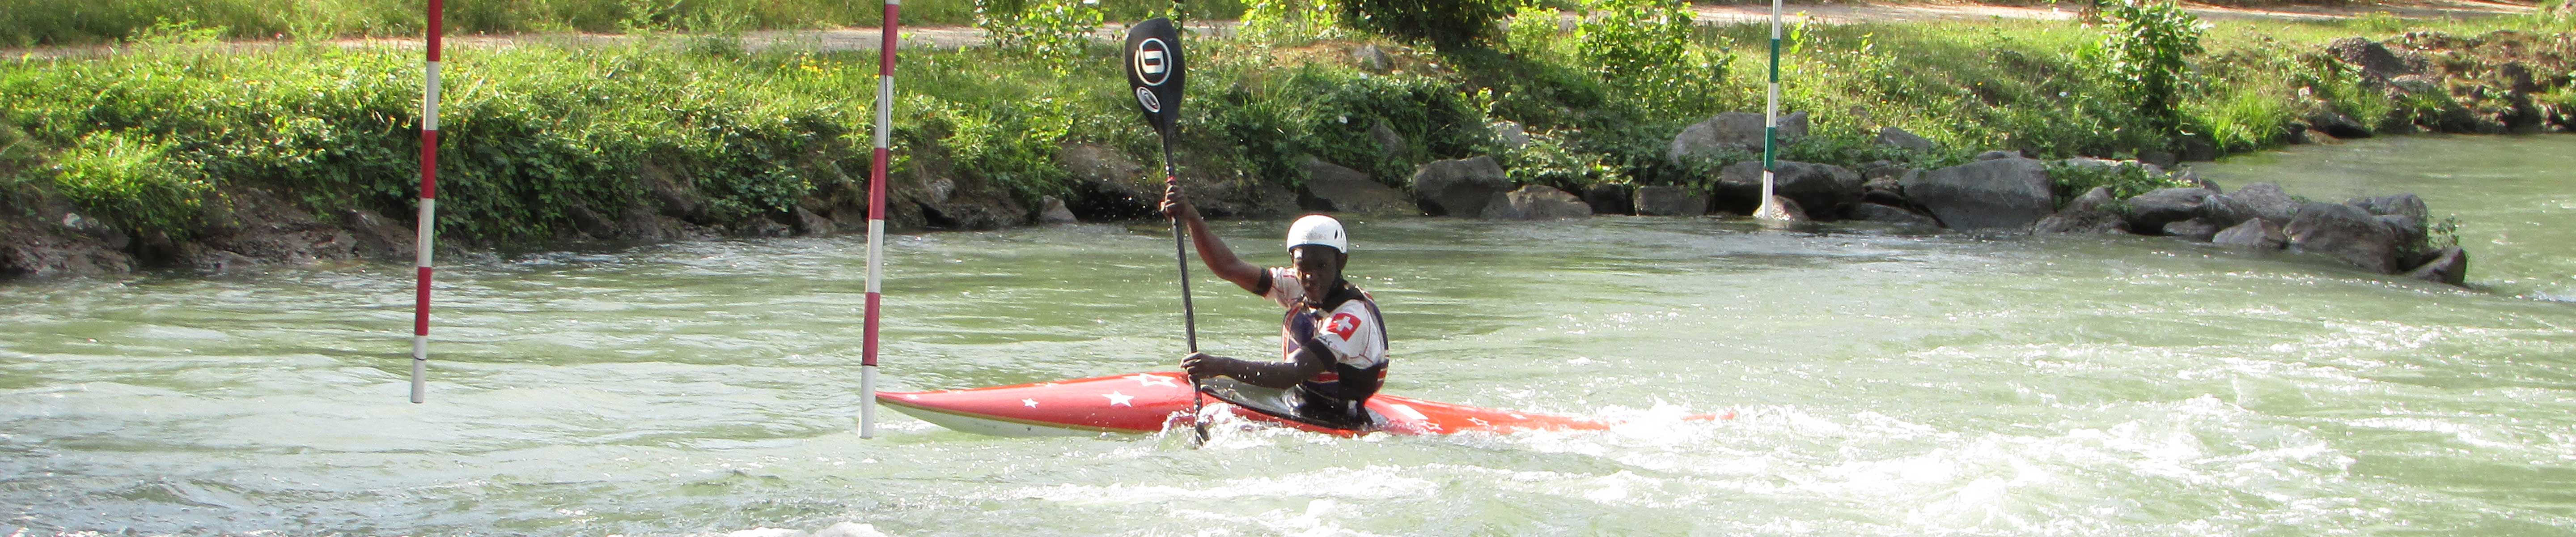 Vawn Humphrey-Wilson in his kayak in whitewater